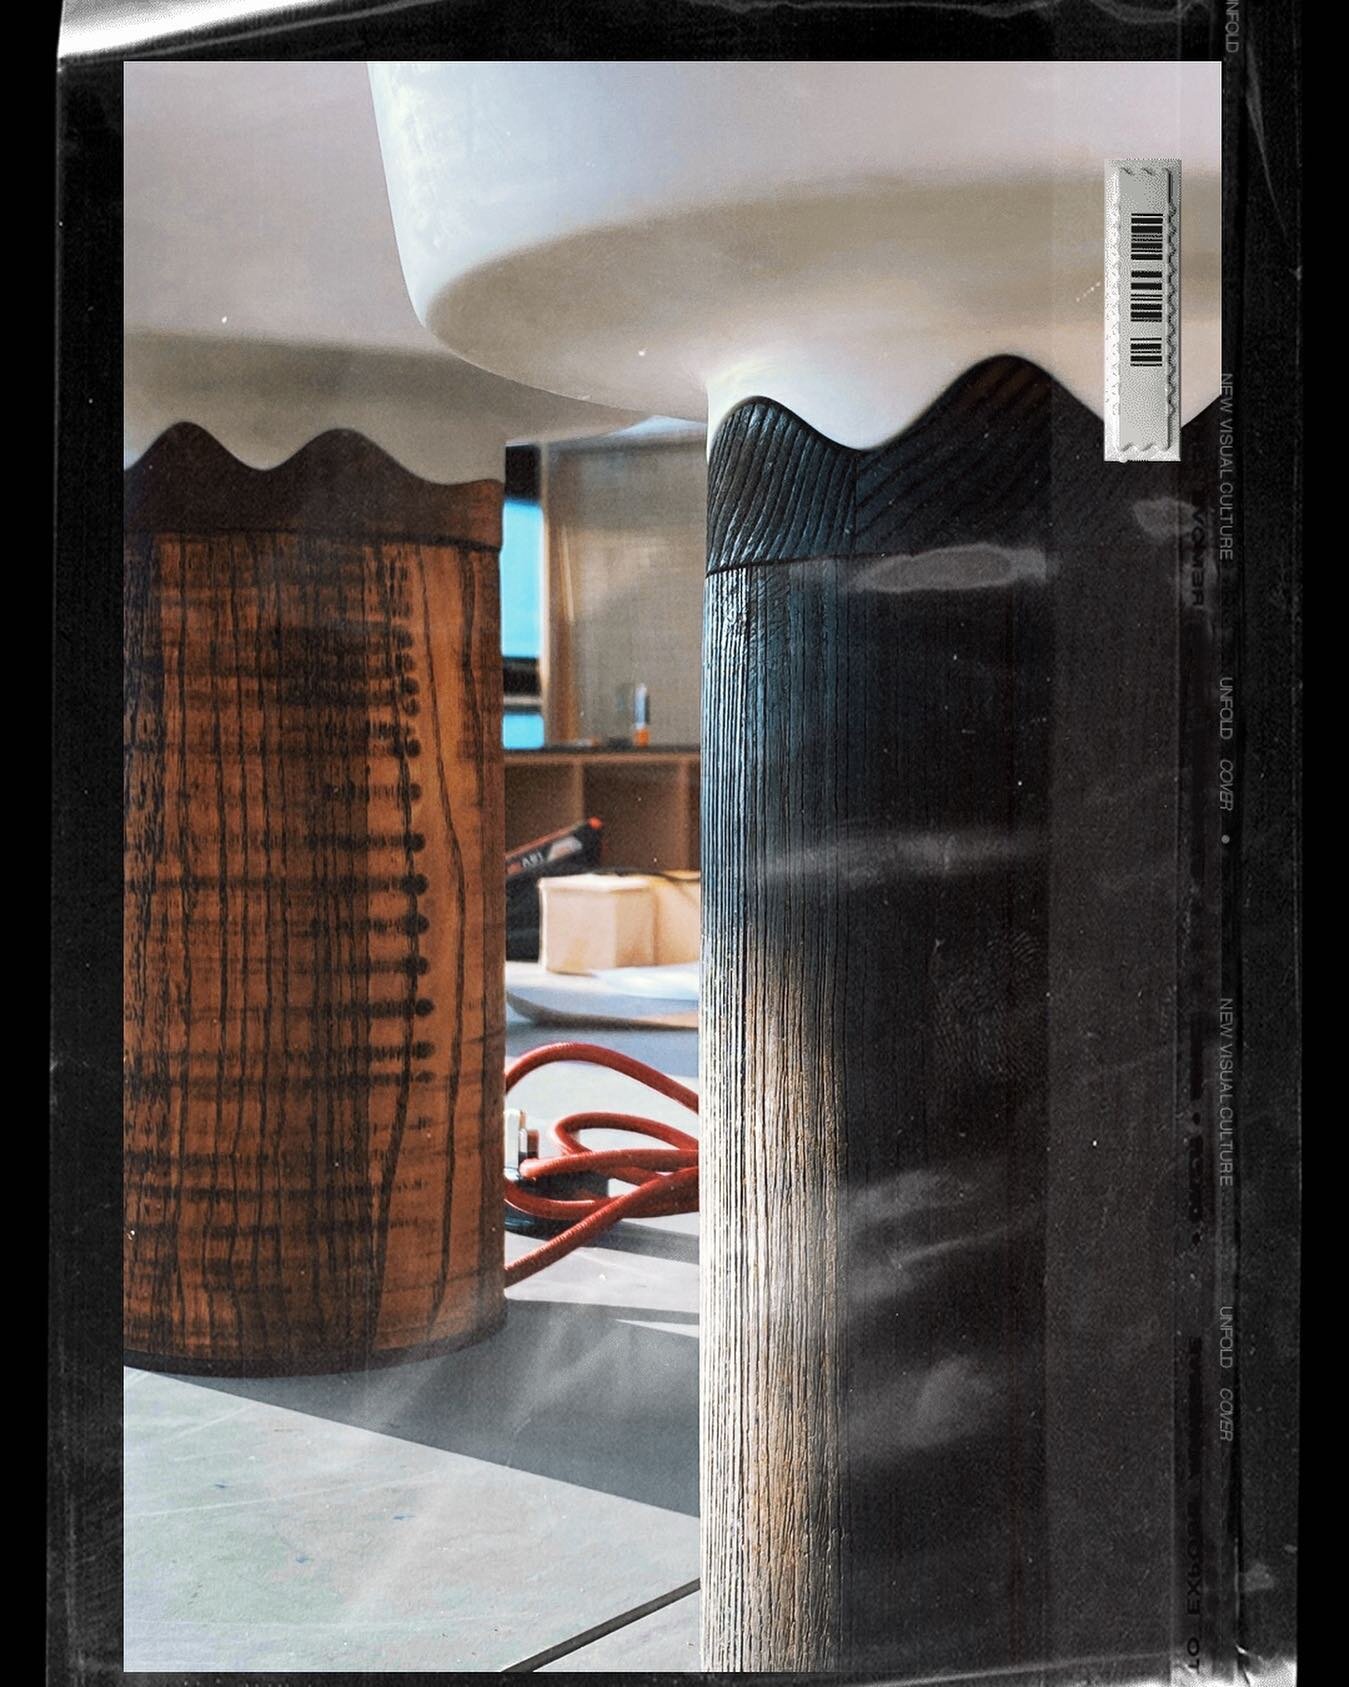 Project Shibusa: A casted porcelain lamp with wood lacquer and shou sugi ban (焼杉板) finishes. 

#london #design #zen #incenseburner #incense #incenseburner #interiordesign #art #craft #productdesign #lamp #lampshade #furniture #furnituredesign #furnit